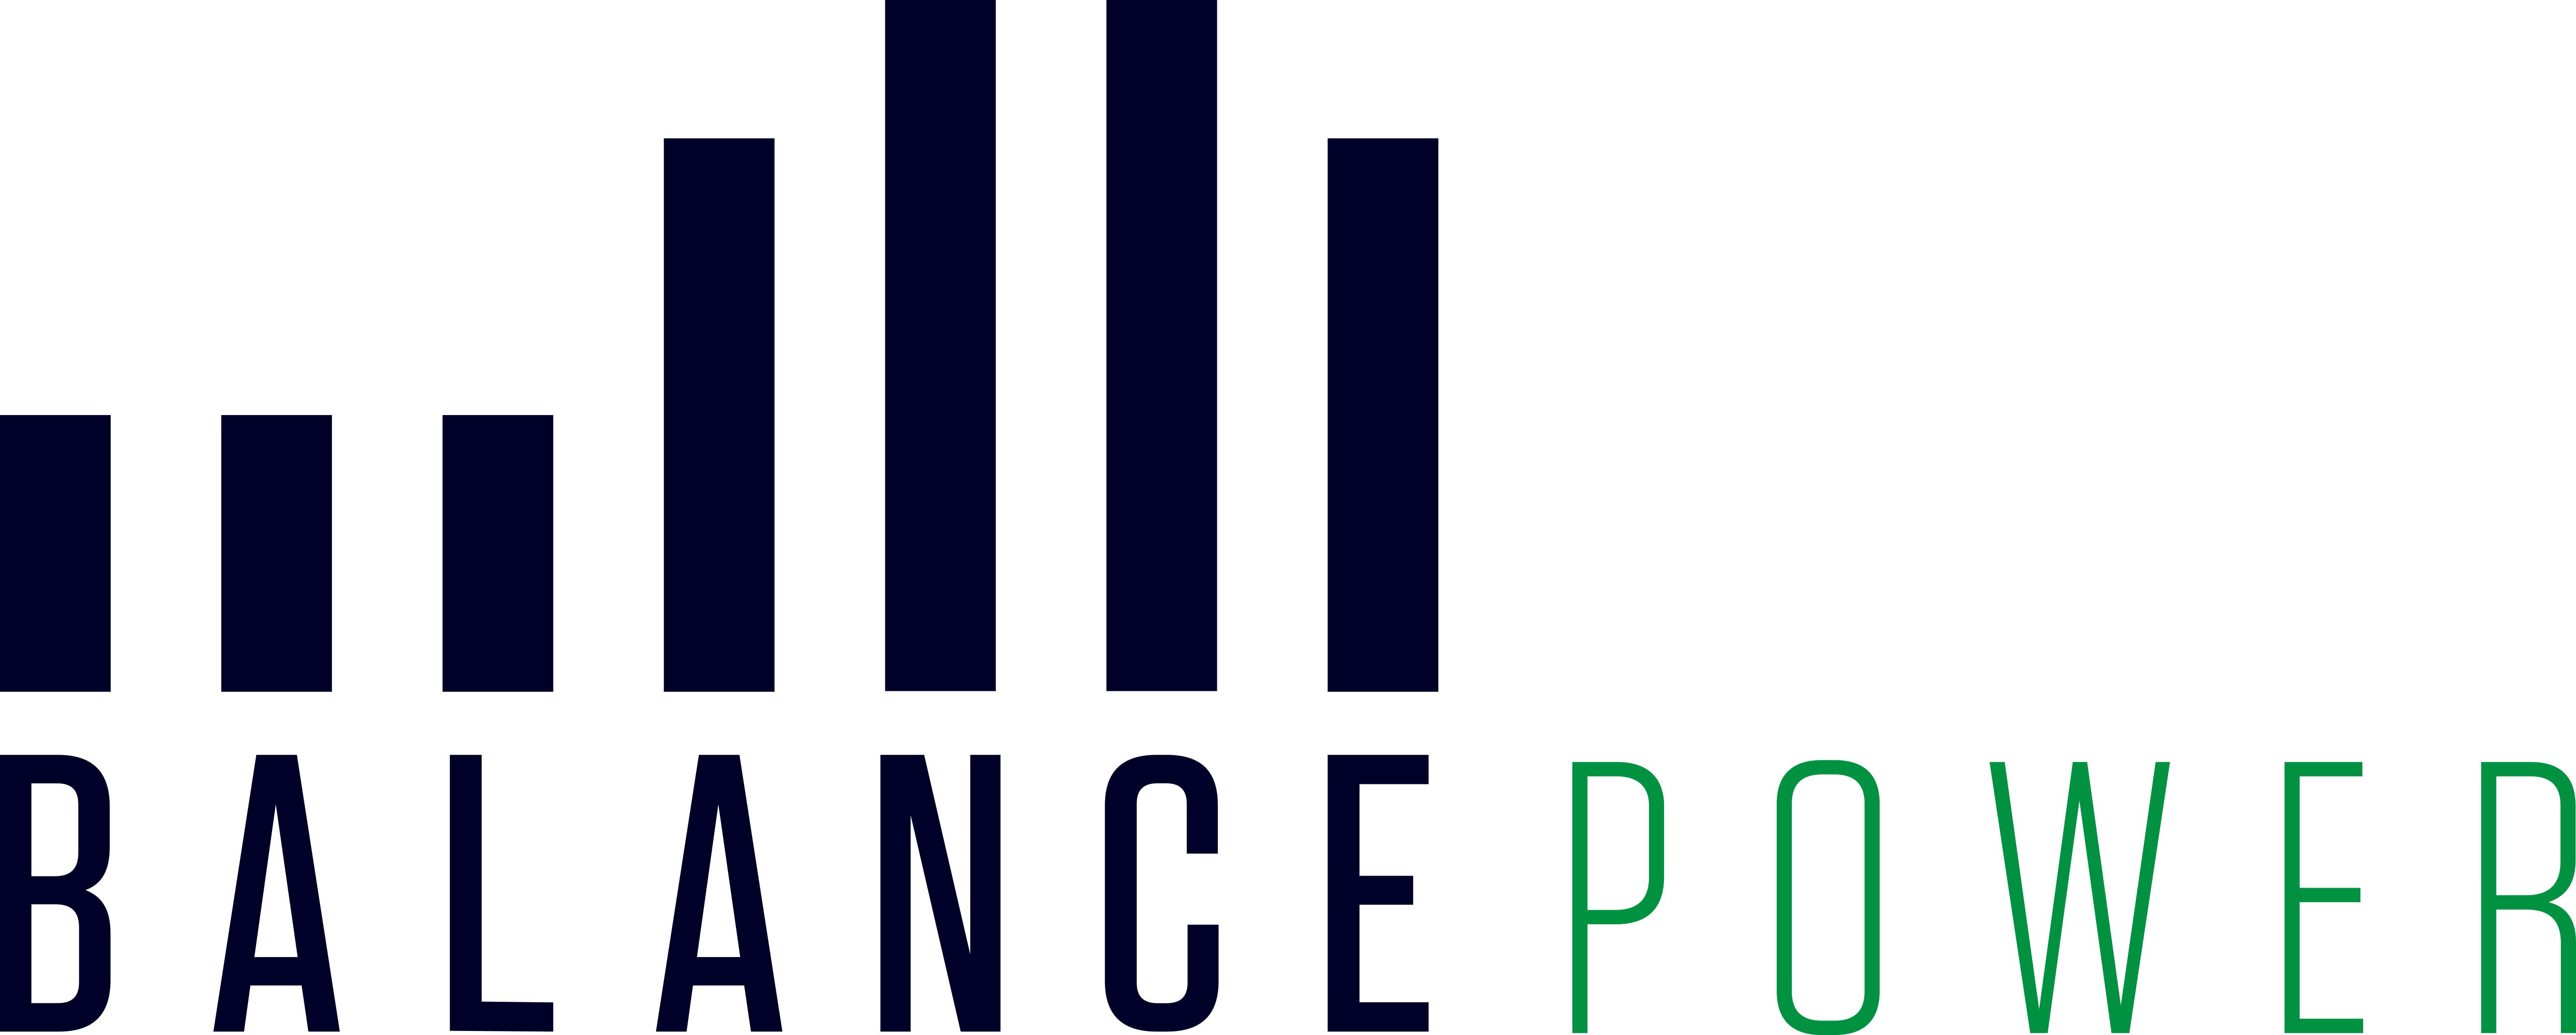 Organisation Logo - Balance Power Projects Ltd